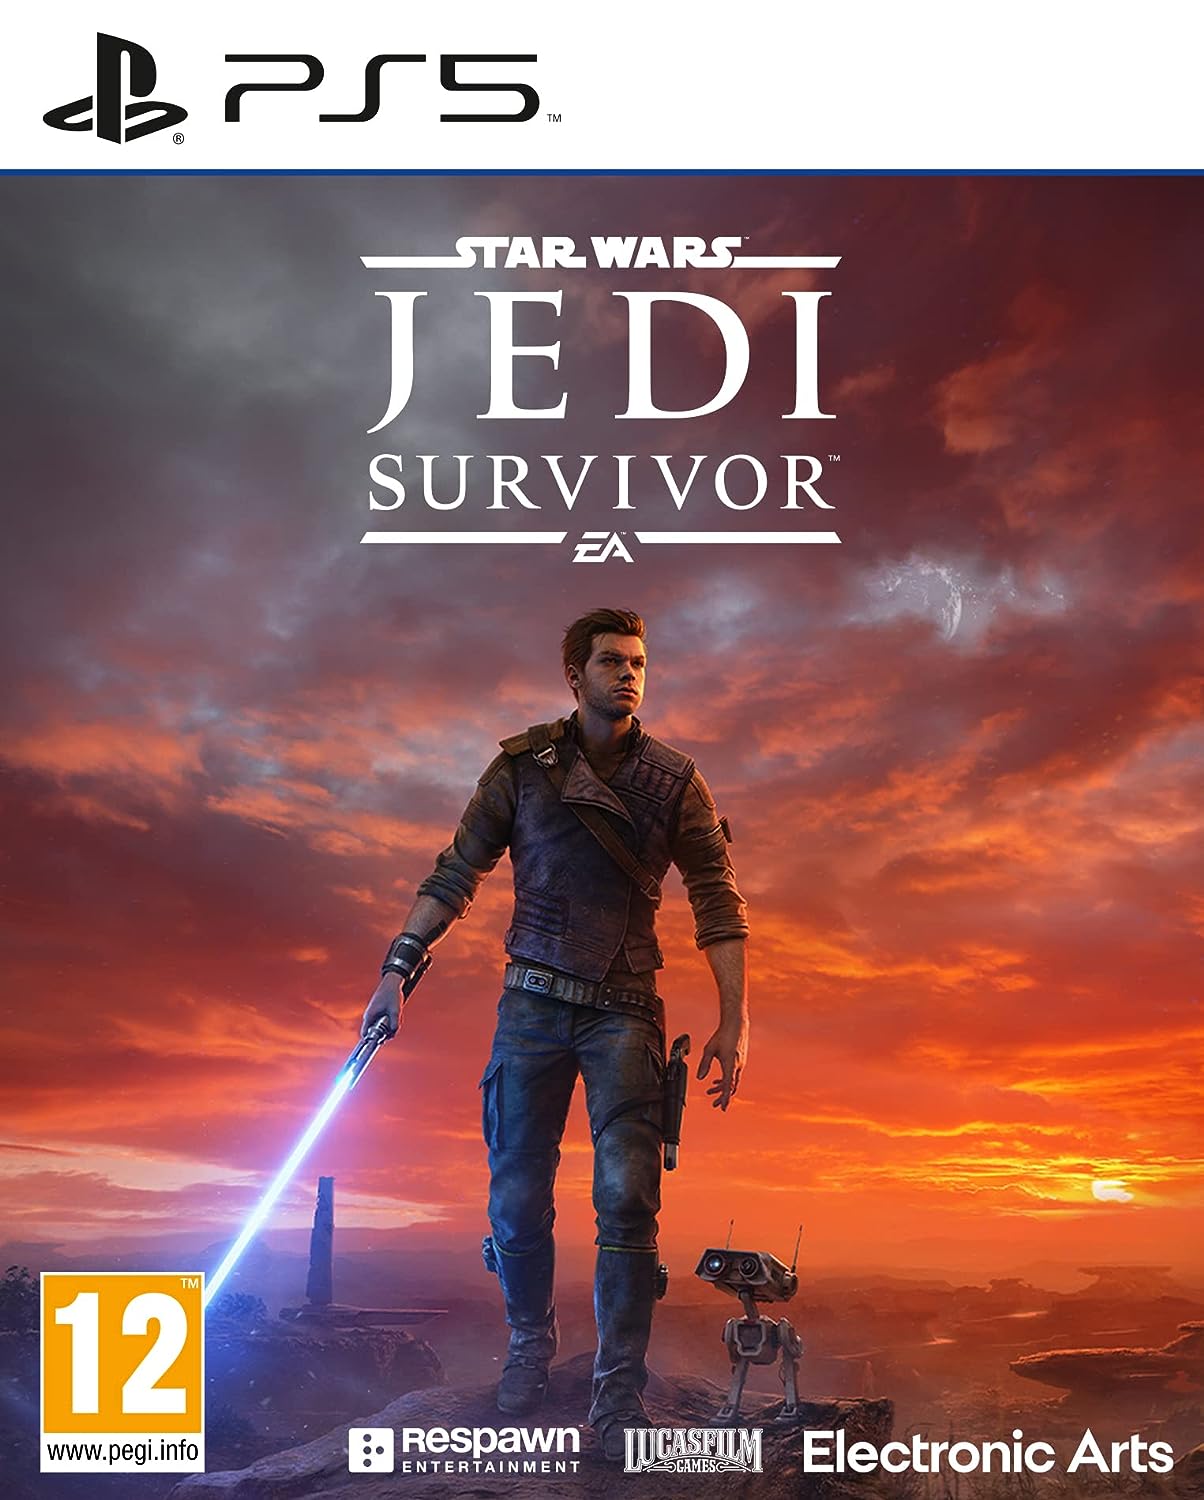 SONY Playstation 5 (PS5) | Star Wars Jedi: Survivor, Electronic Arts (EA)